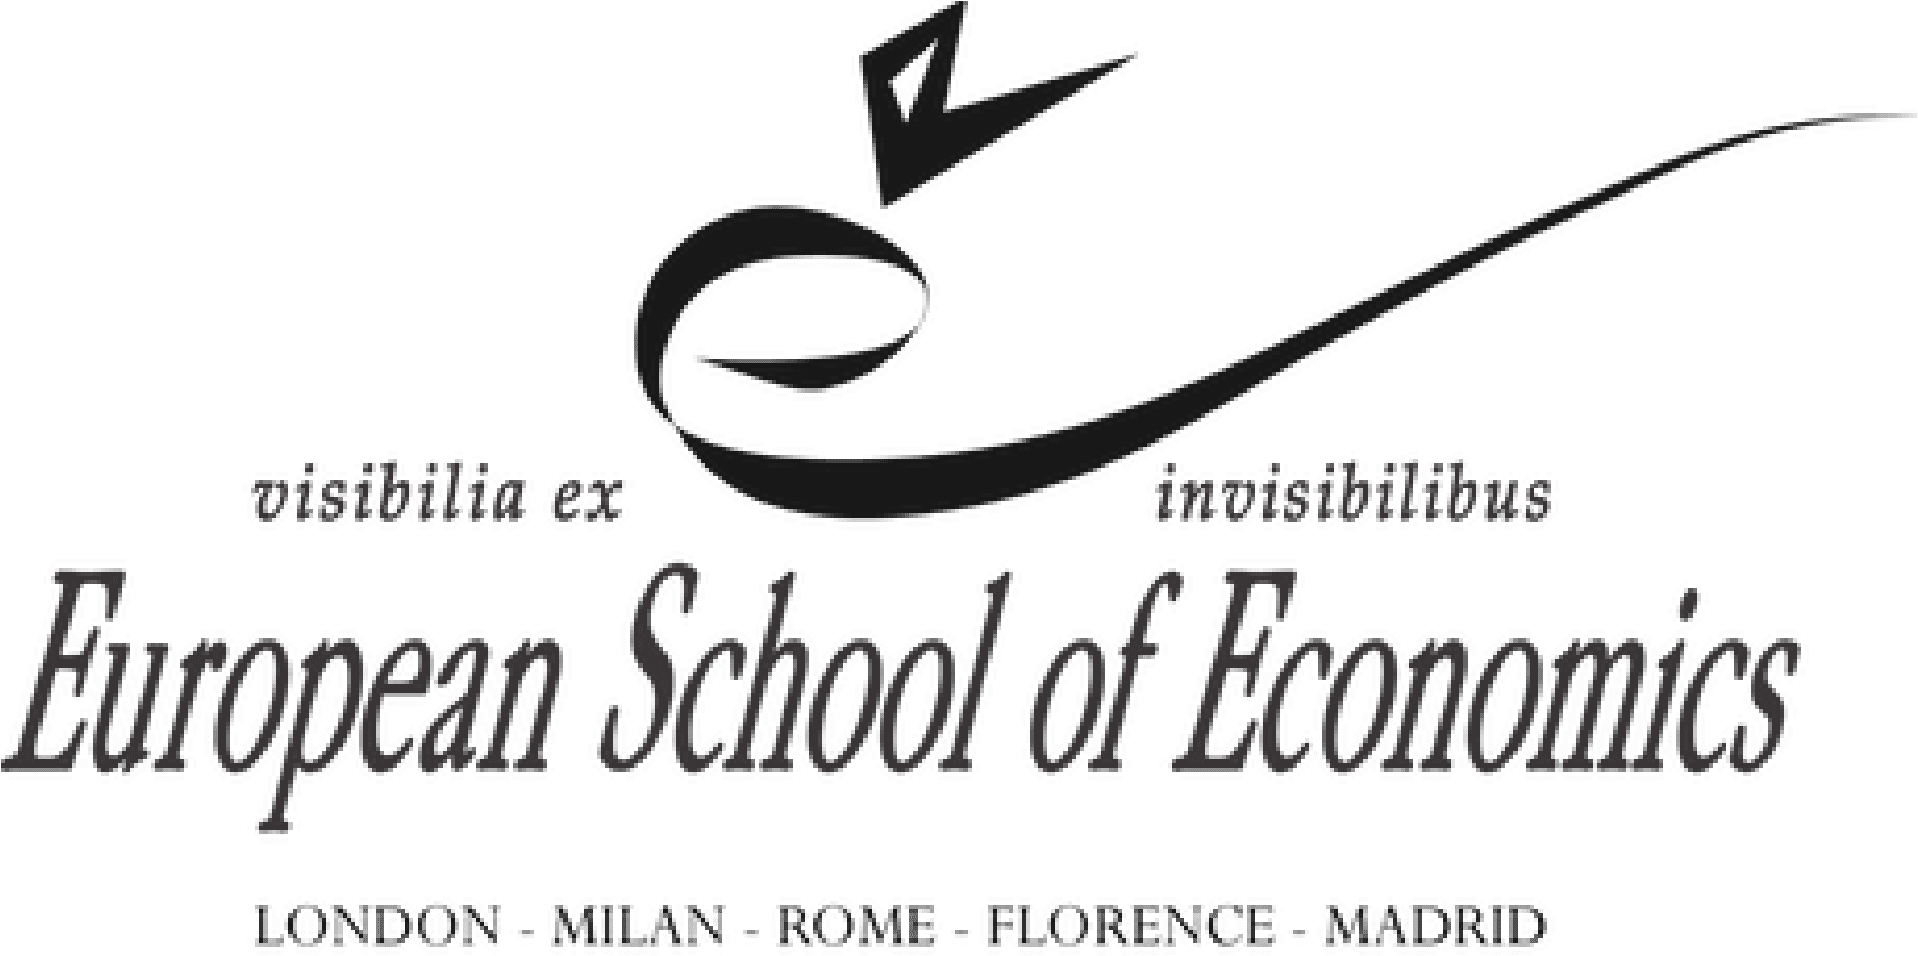 Euro School of Econ